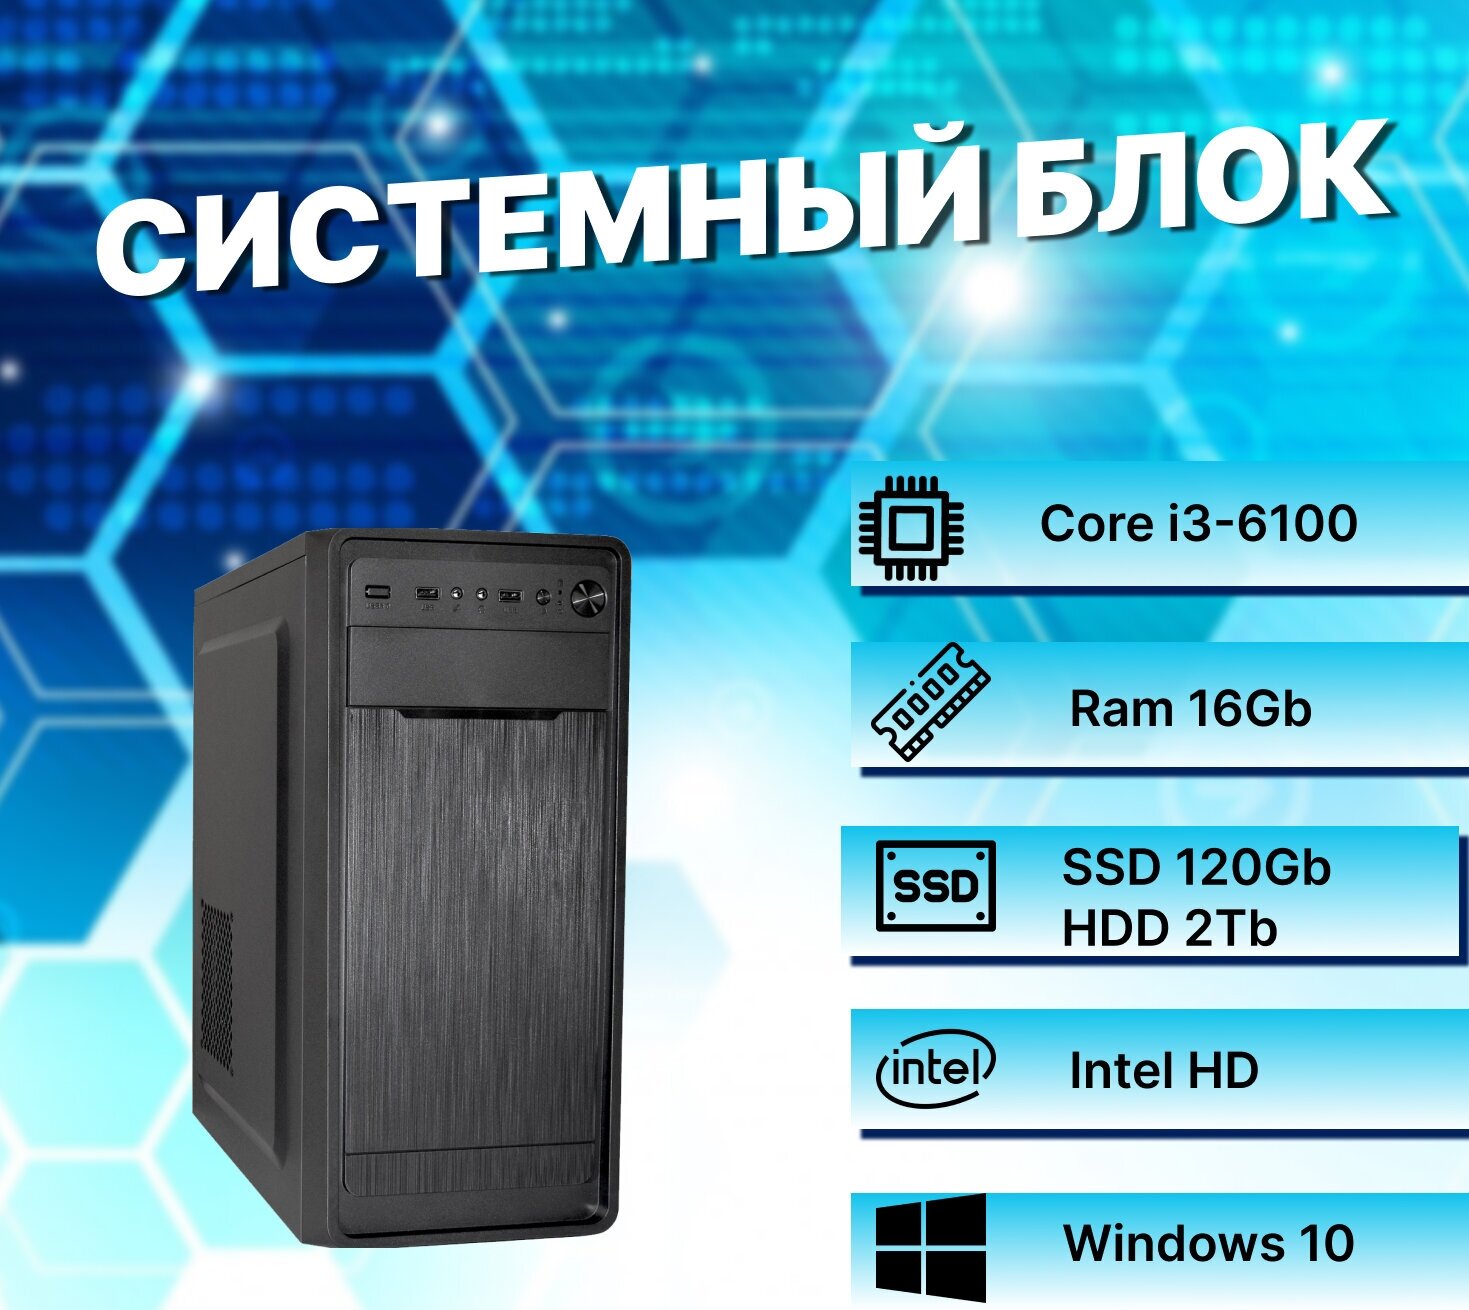 Системный блок Intel Core I3-6100 (3.7ГГц)/ RAM 16Gb/ SSD 120Gb/ HDD 2Tb/ Intel HD/ Windows 10 Pro